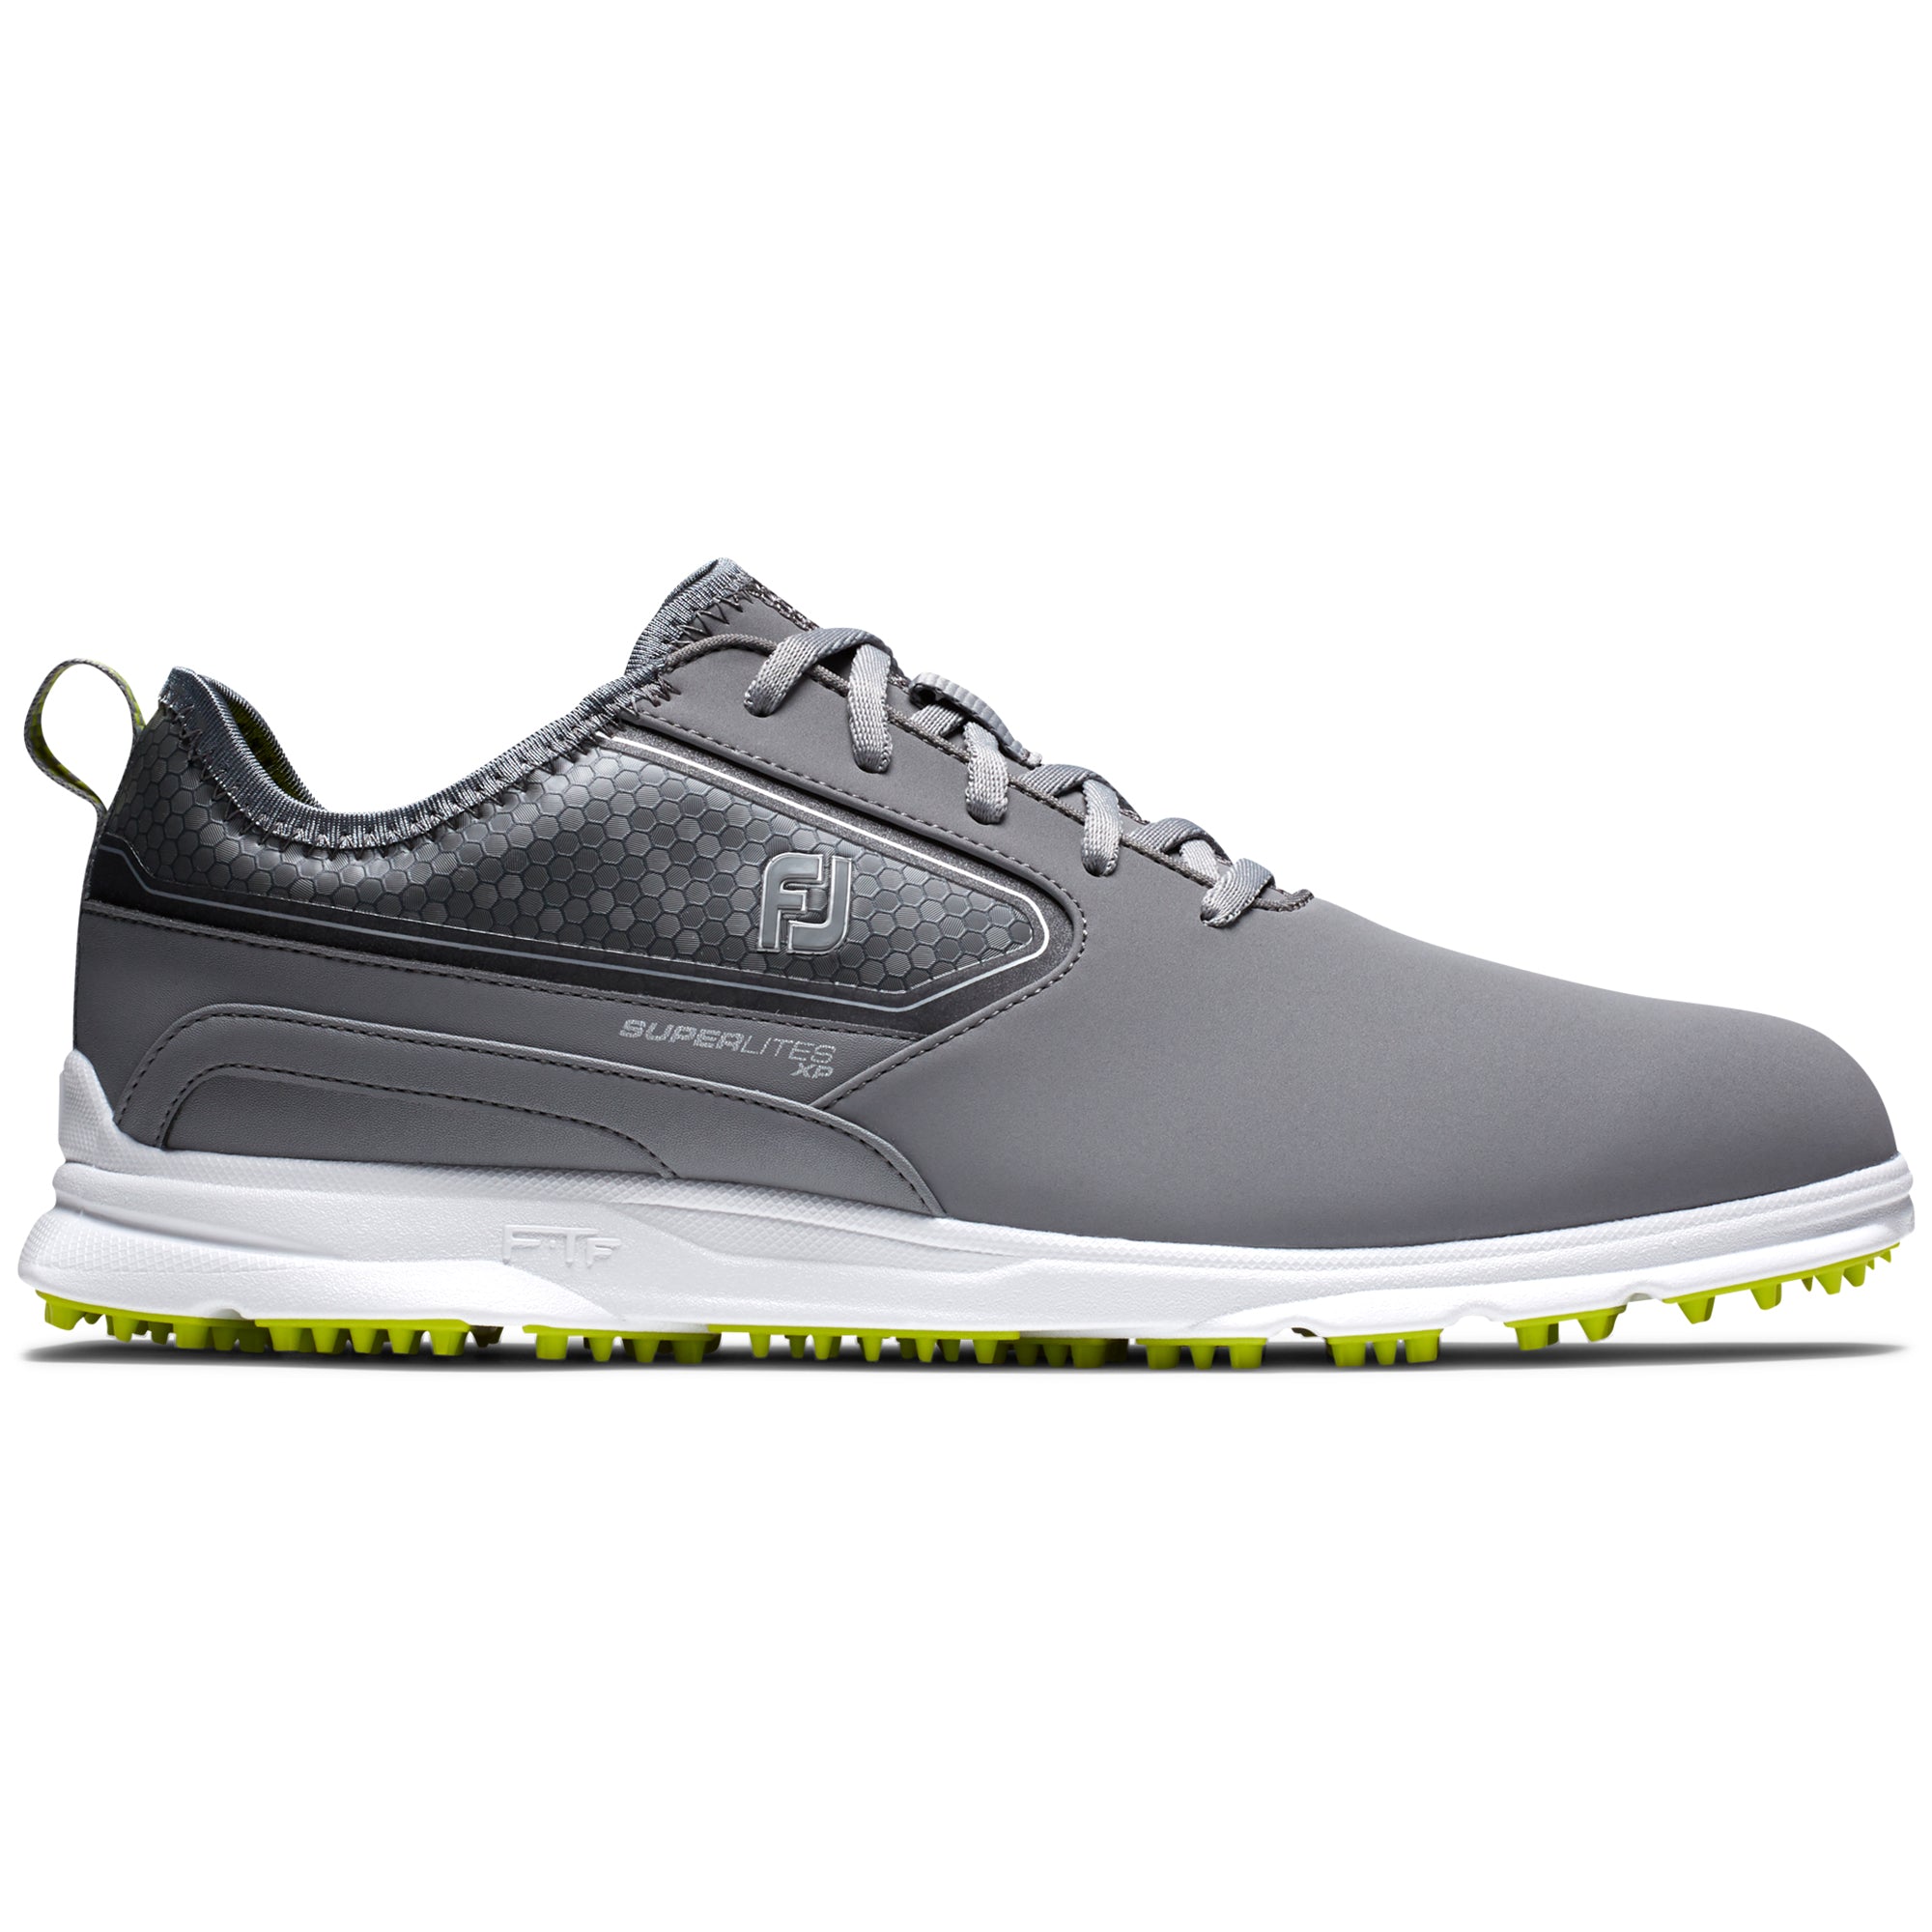 footjoy-superlites-xp-golf-shoes-58086-grey-white-lime